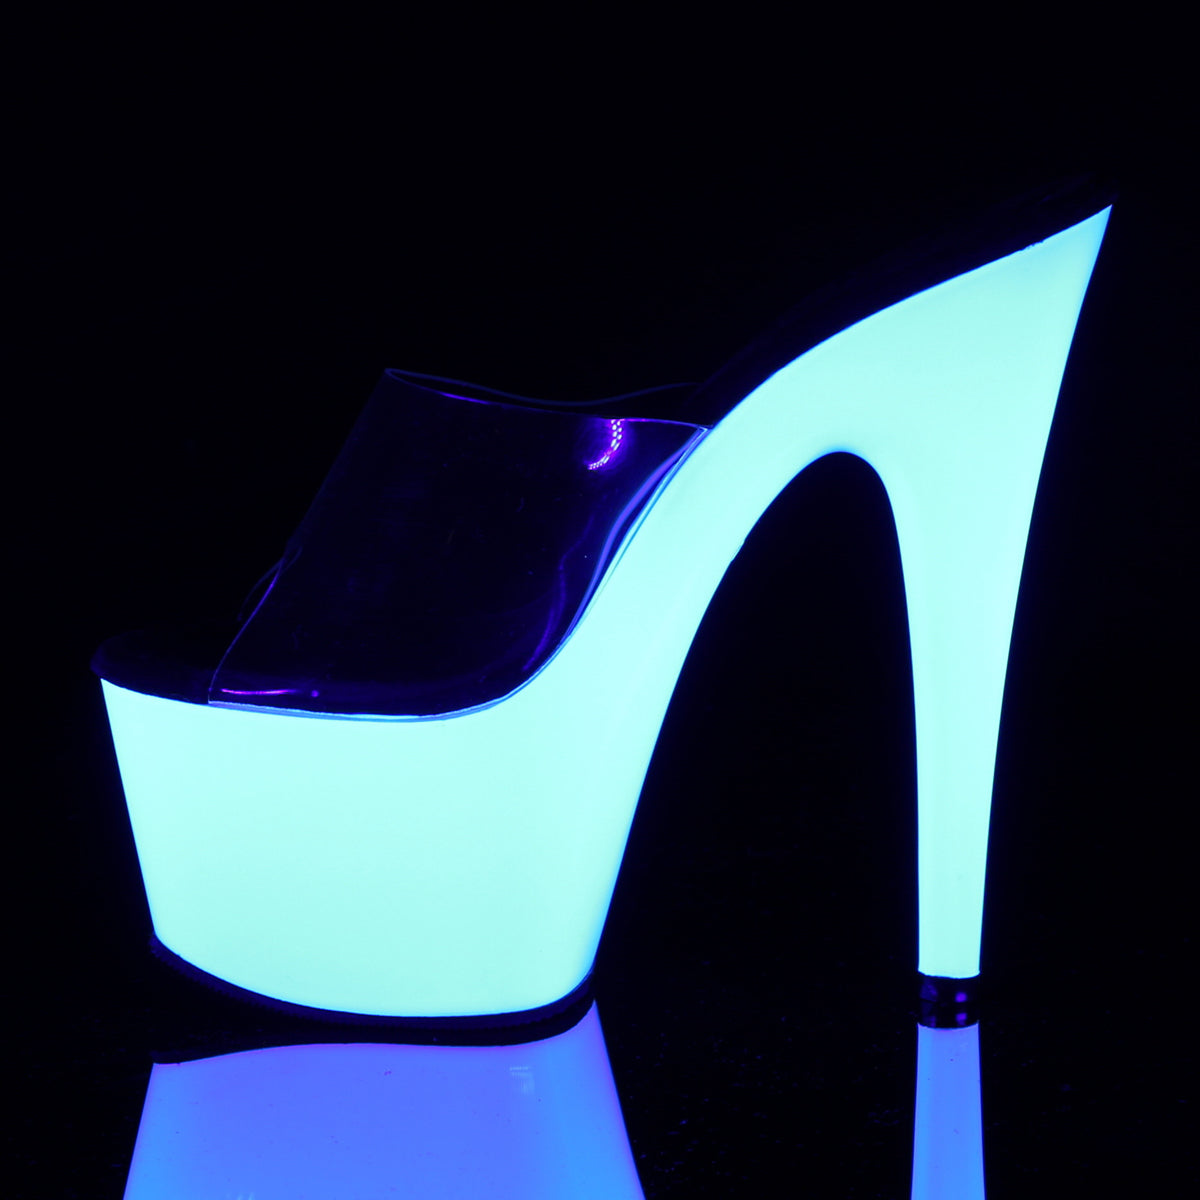 Pleaser Womens Sandals ADORE-701UV Clr/Neon Wht